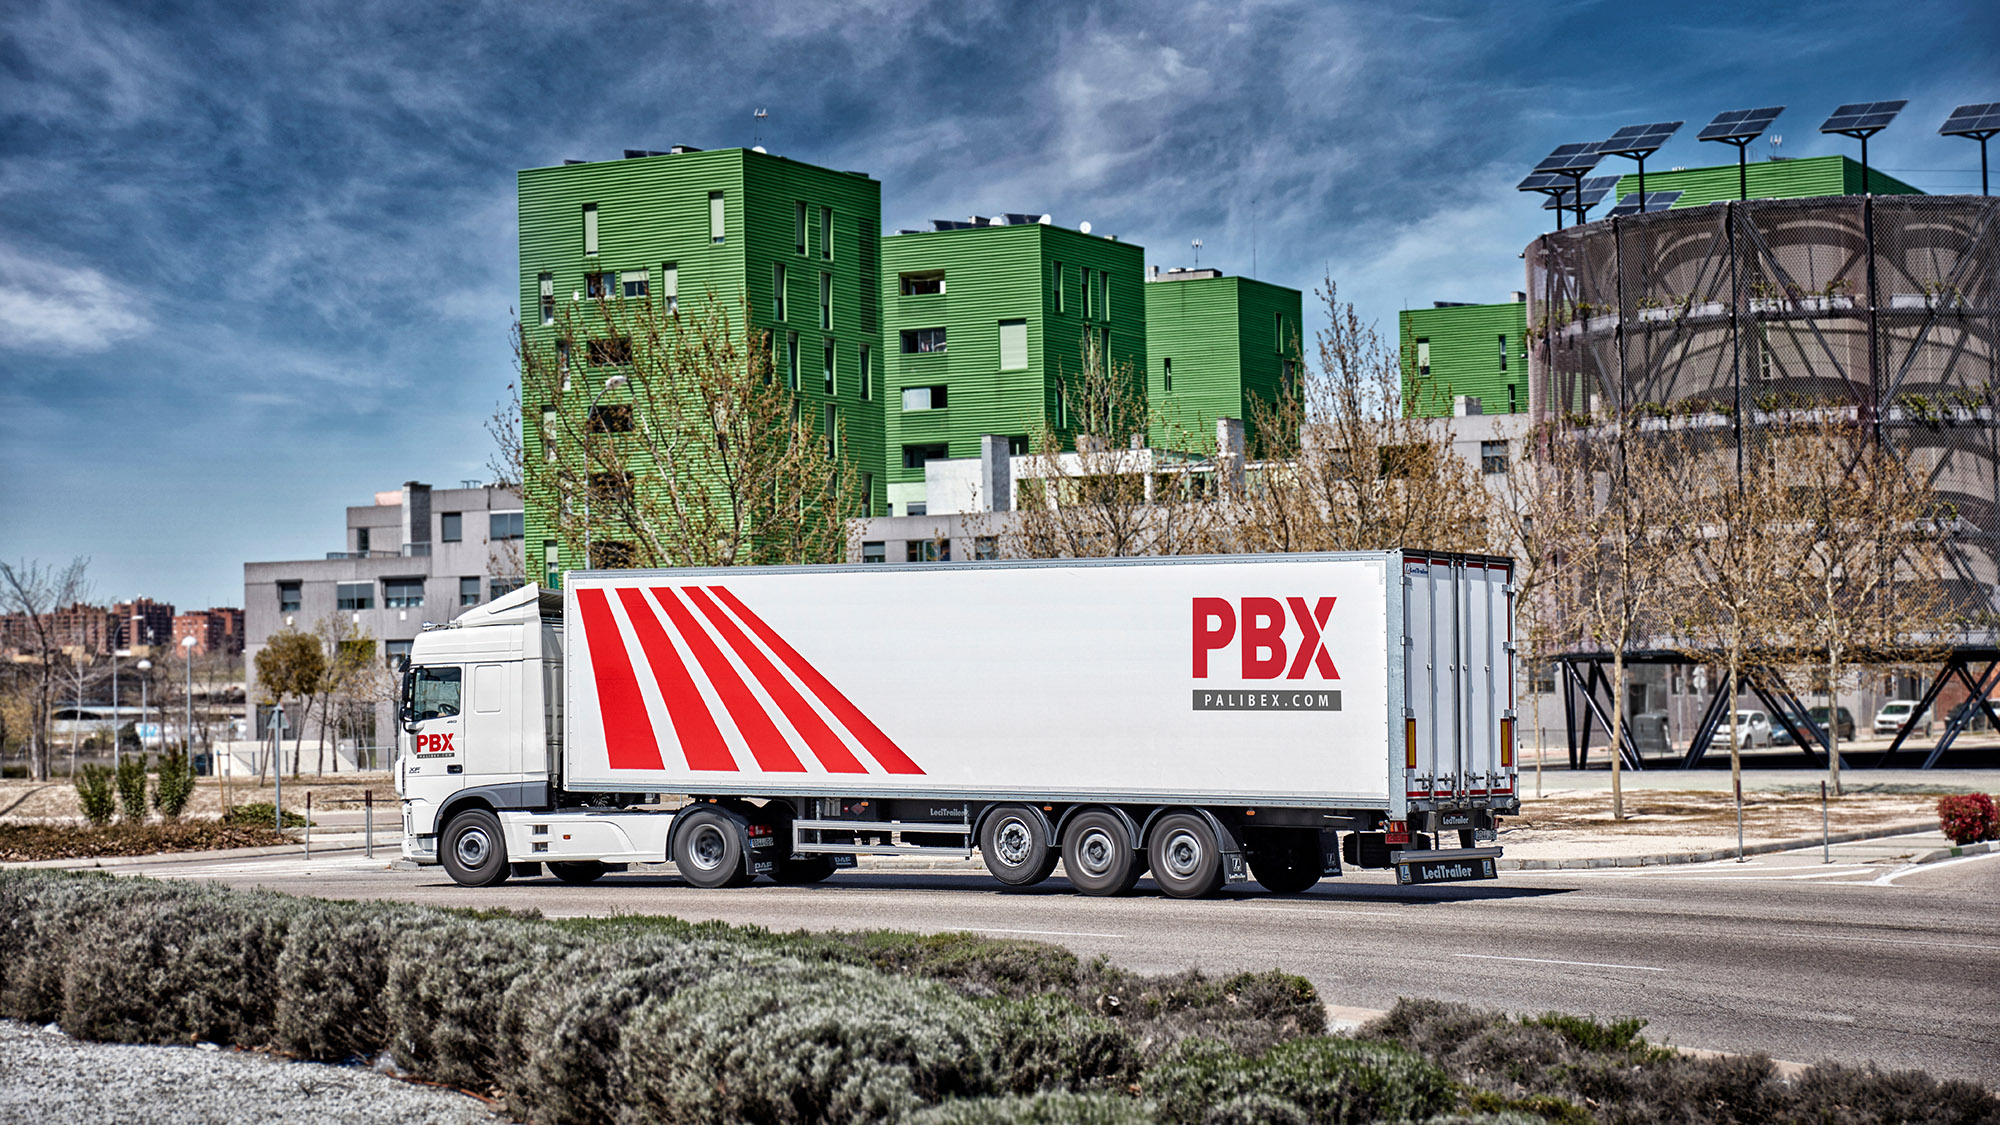 Palibex - PBX -Transporte urgente mercancia paletizada - Beusual - ROTULACION FLOTA TRAILER